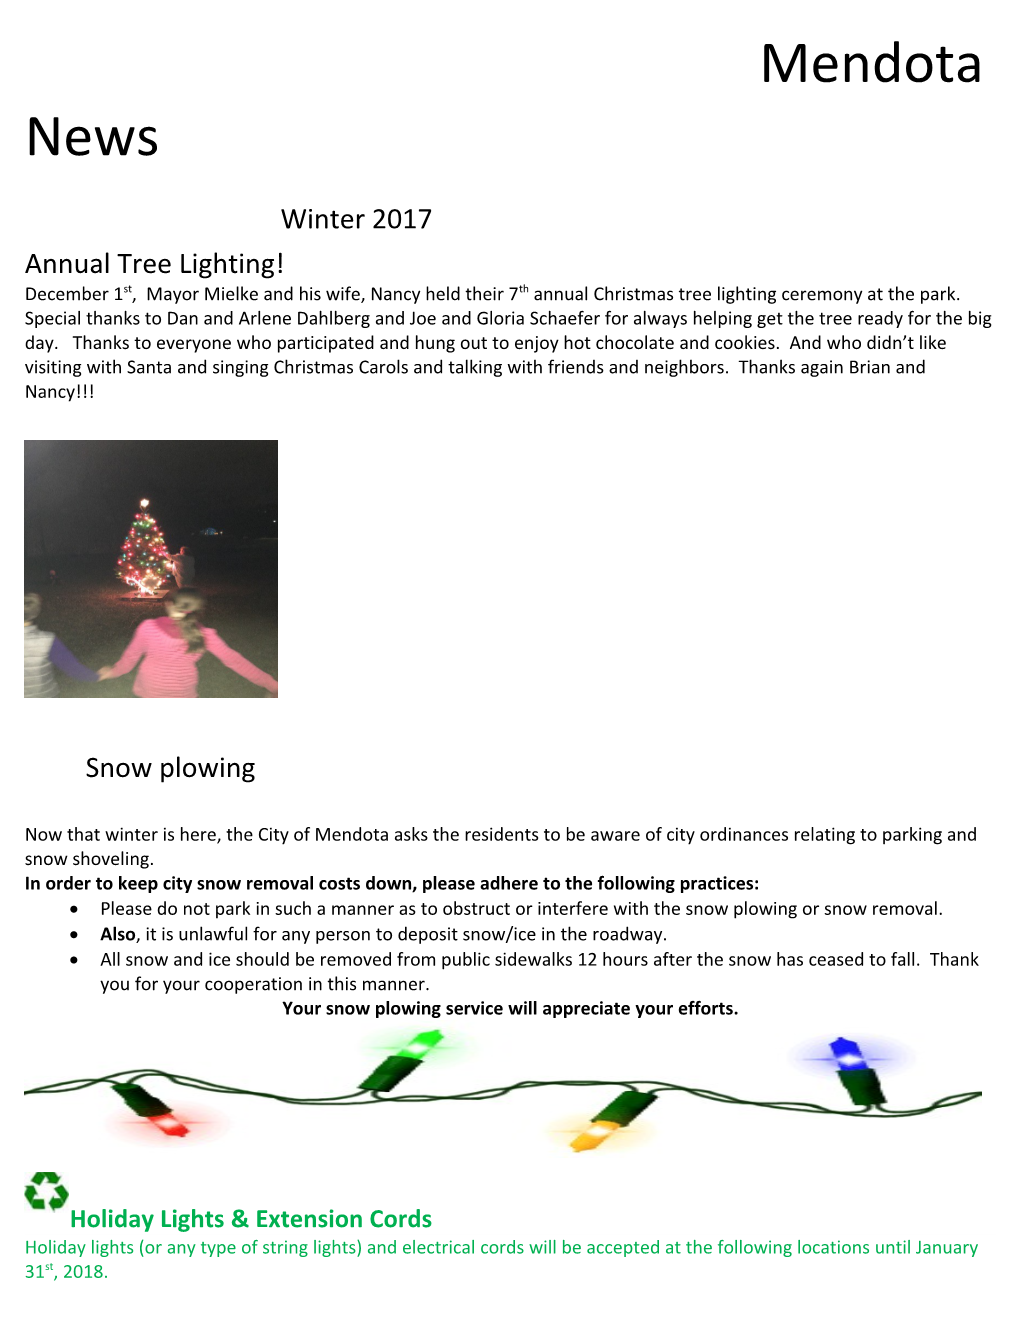 Annual Tree Lighting!